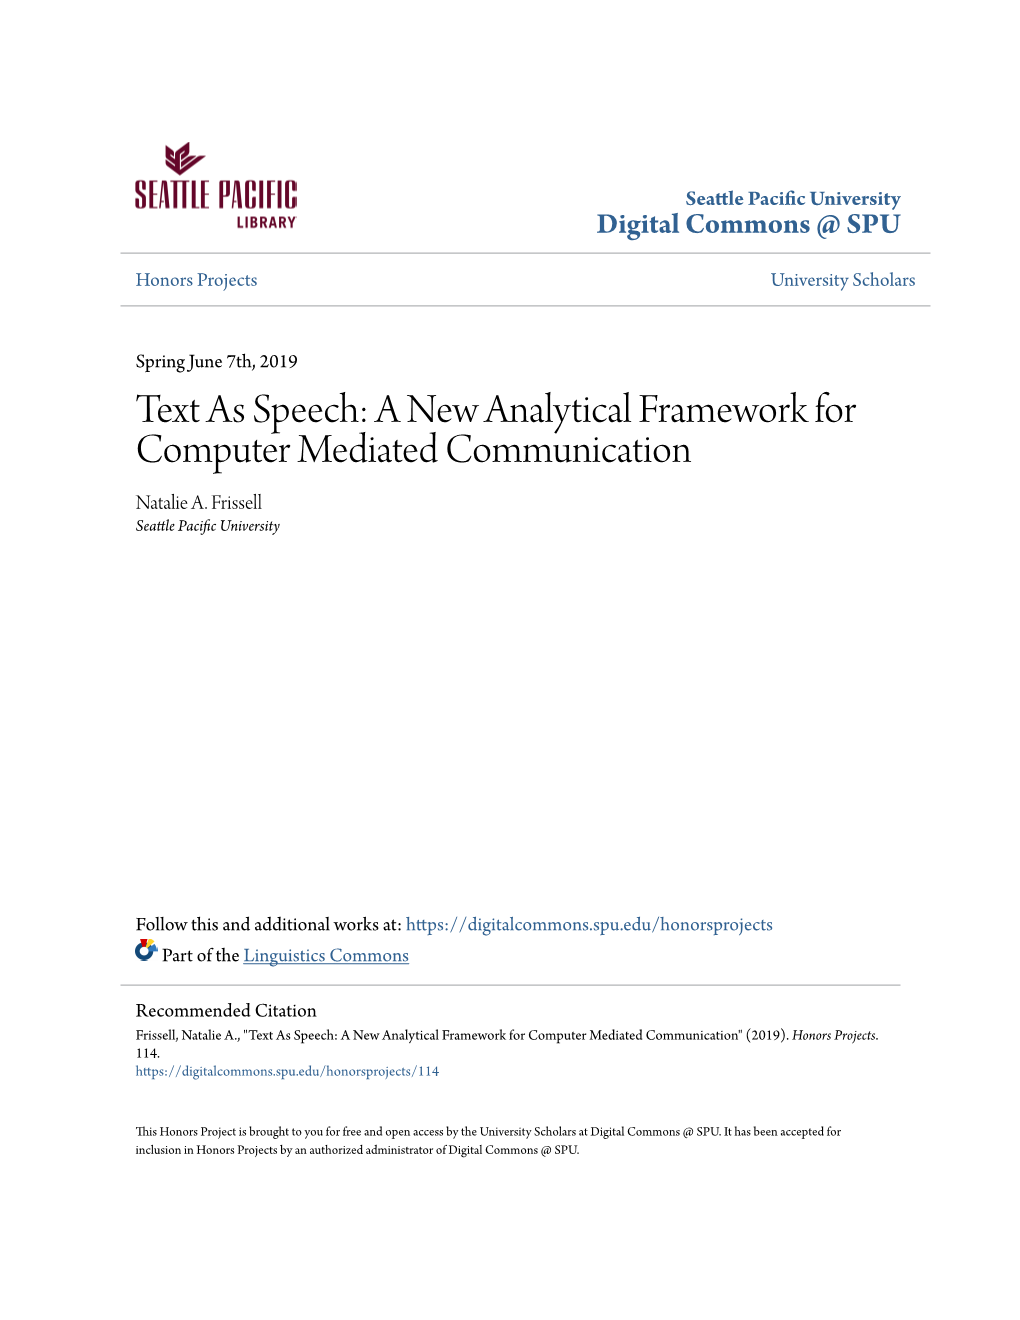 Text As Speech: a New Analytical Framework for Computer Mediated Communication Natalie A